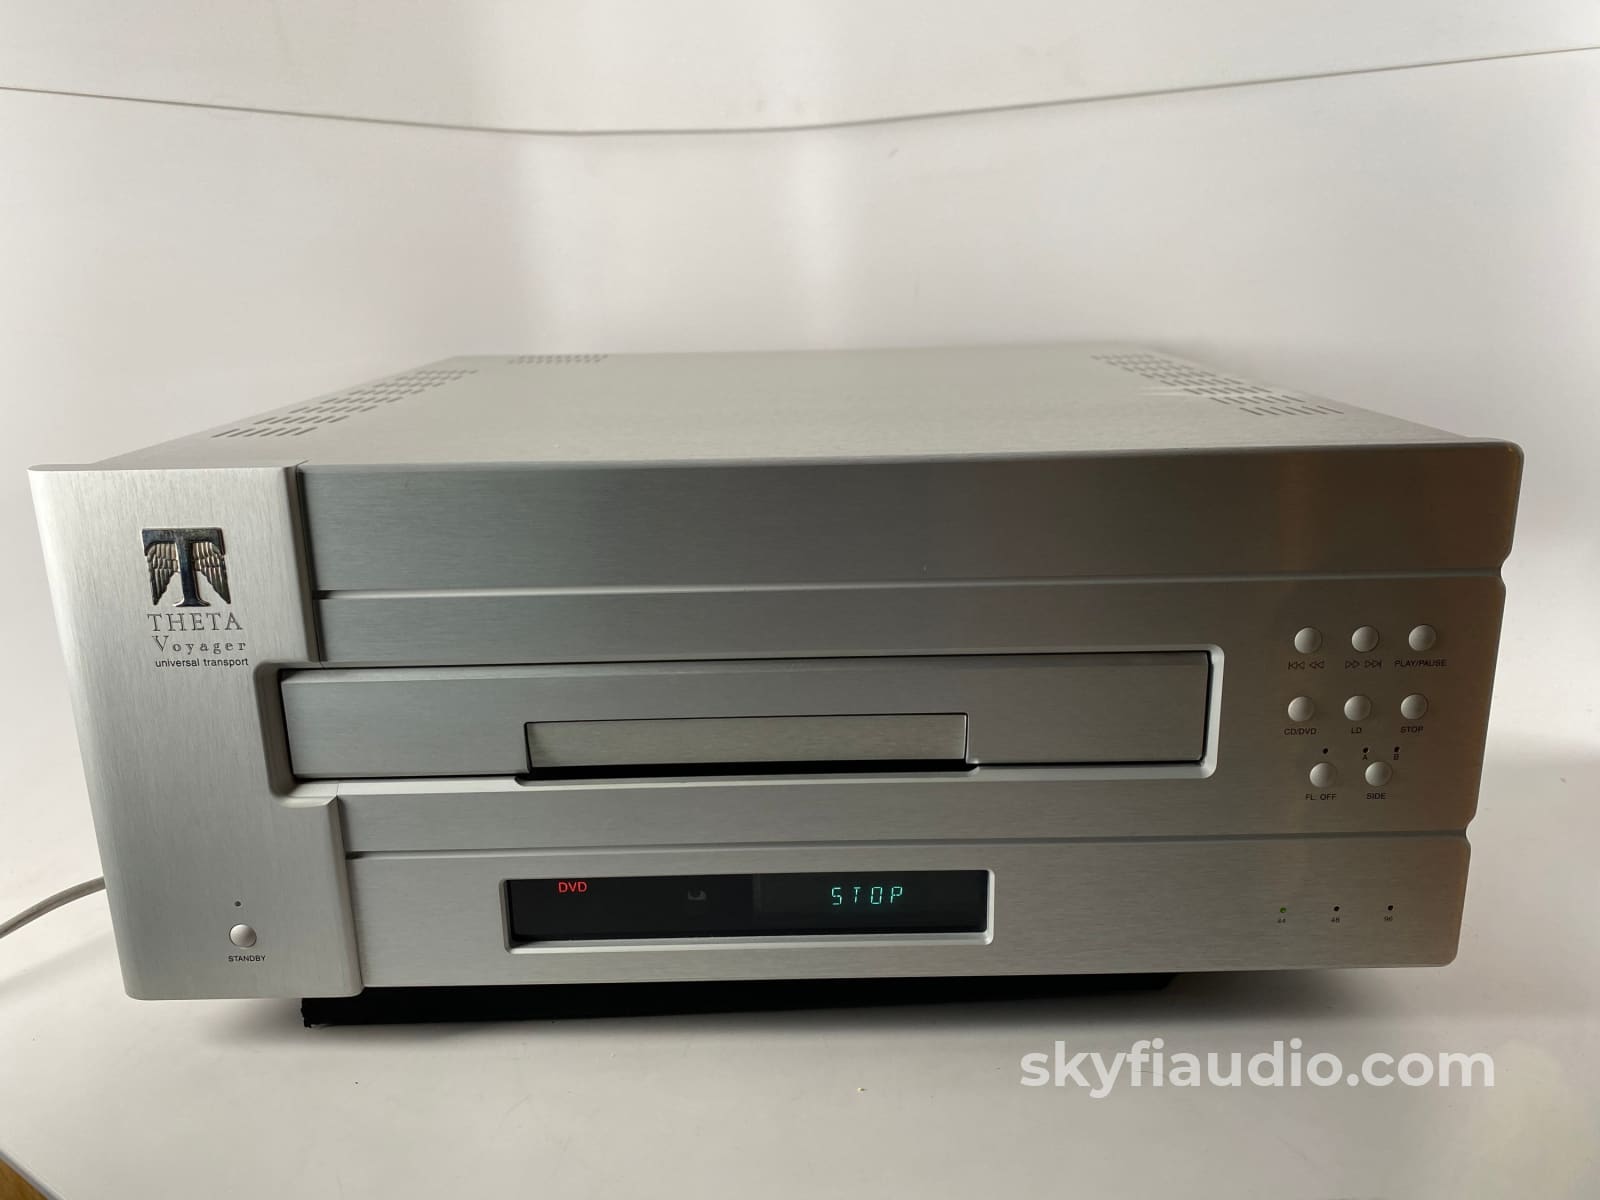 Theta Digital Voyager Universal Cd Dvd And Laserdisc Player +